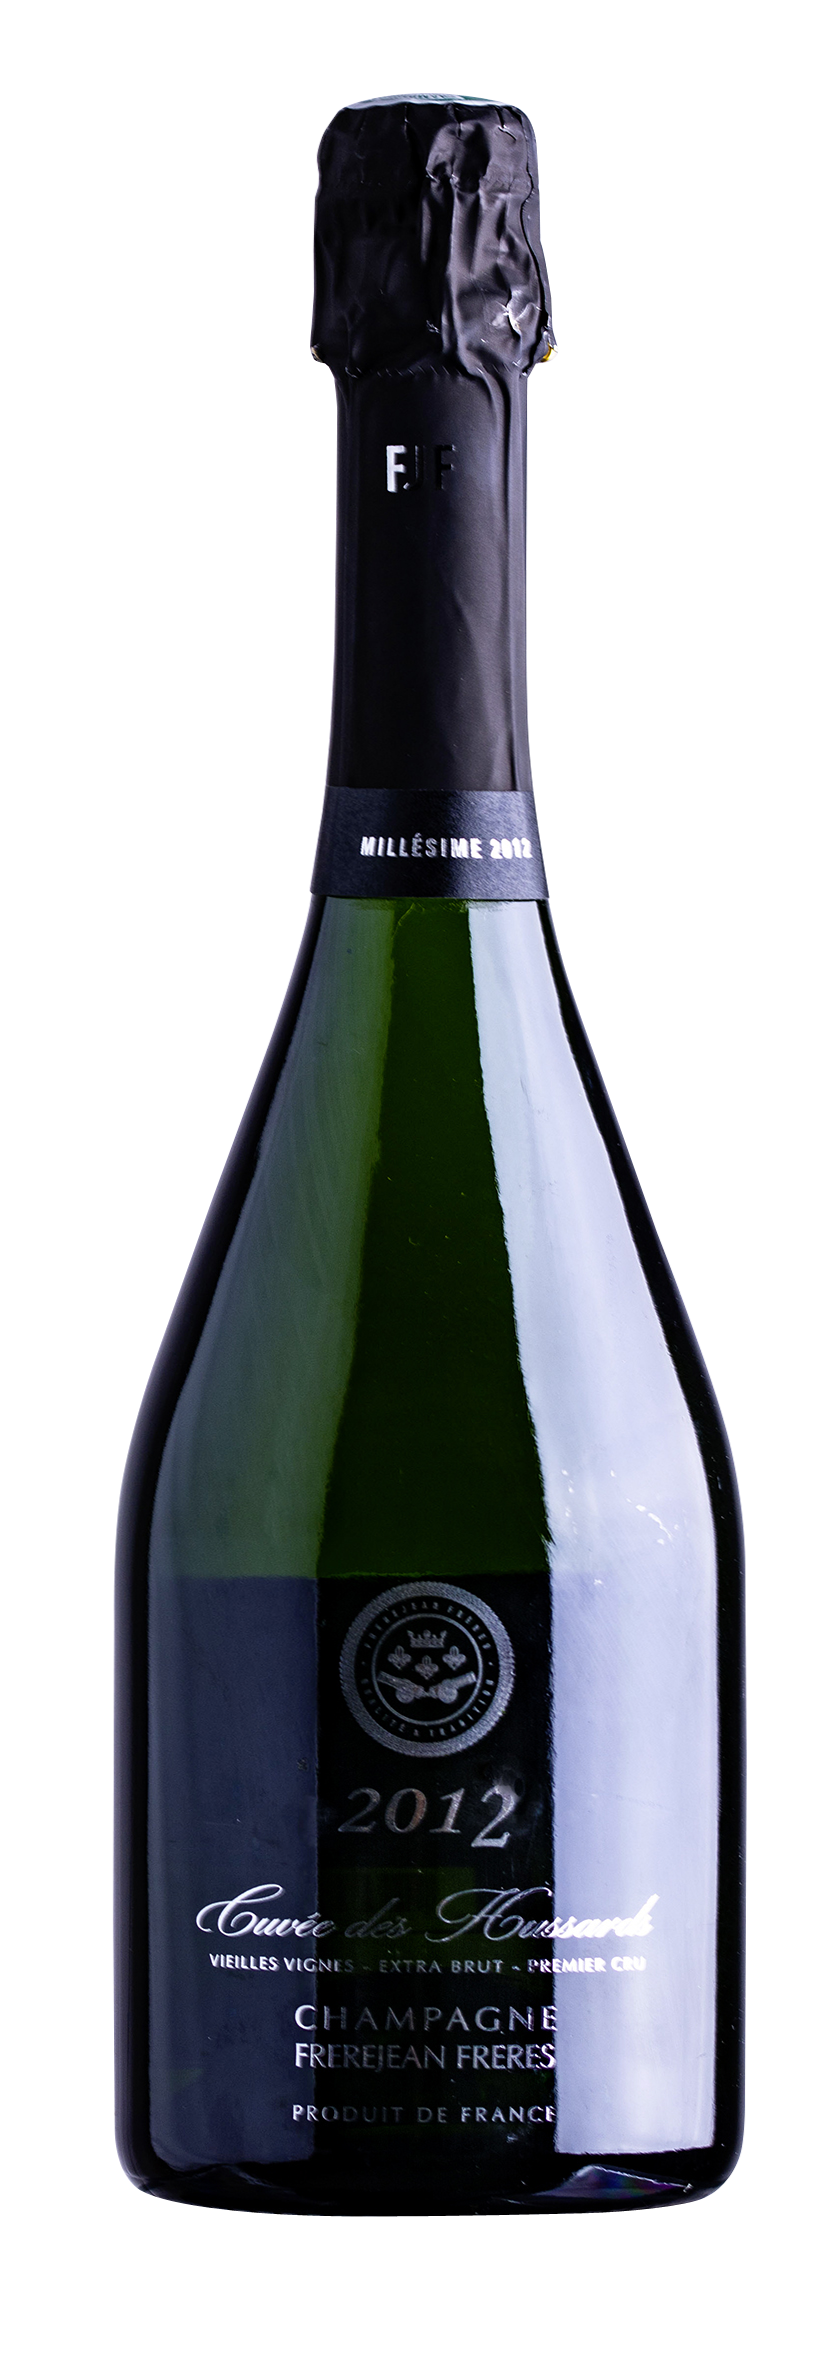 Champagne AOC Premier Cru Cuvée des Hussards 2012